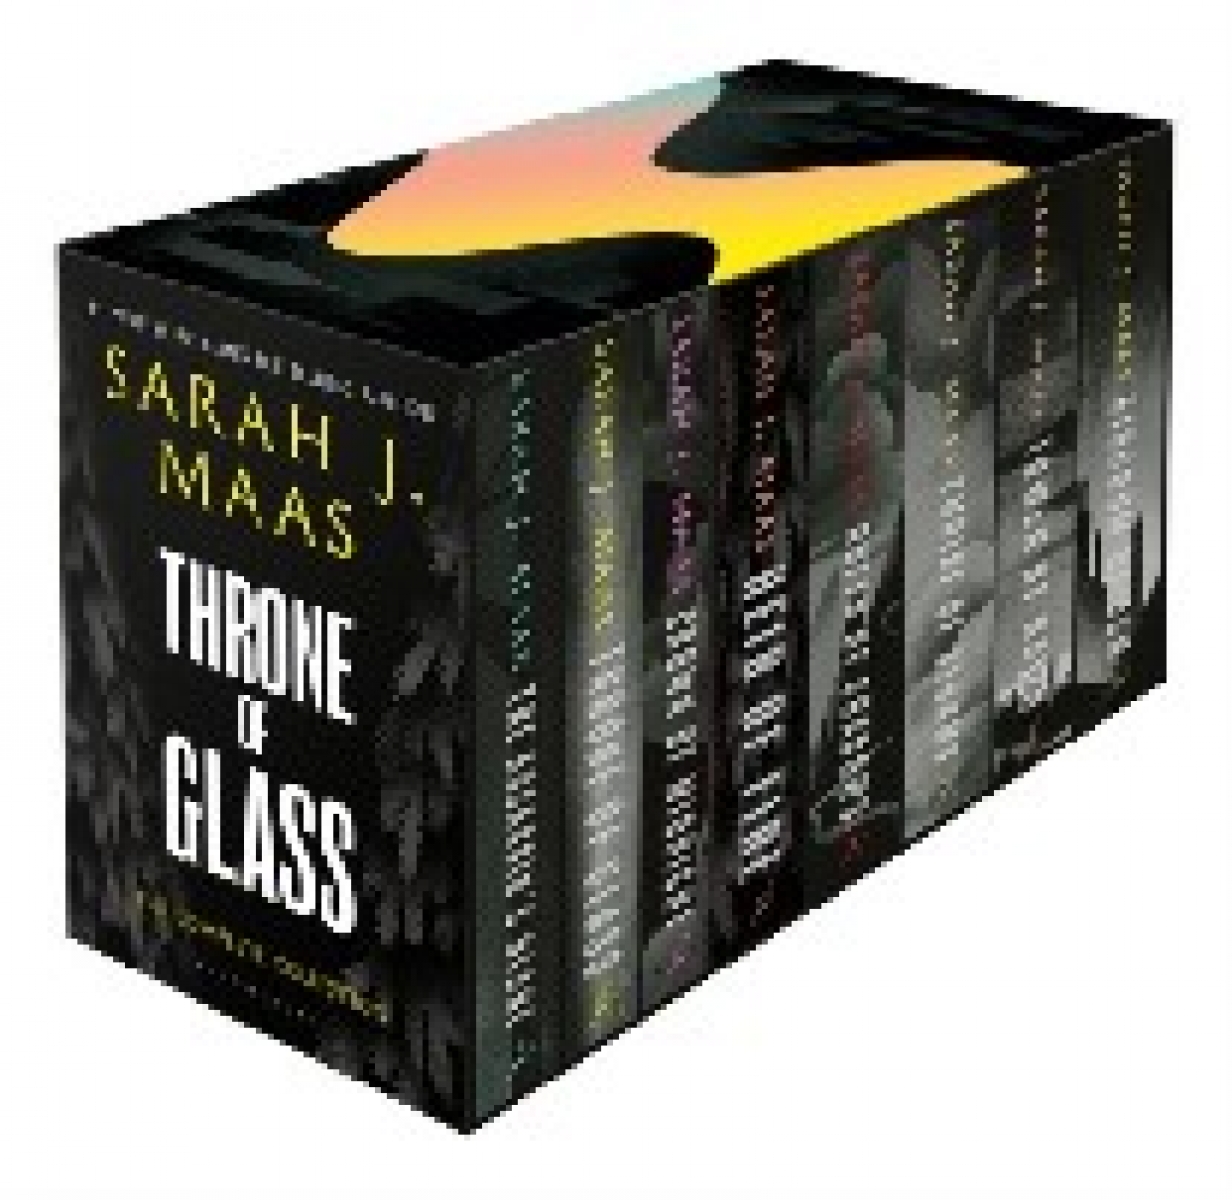 Throne of glass box set (paperback) 